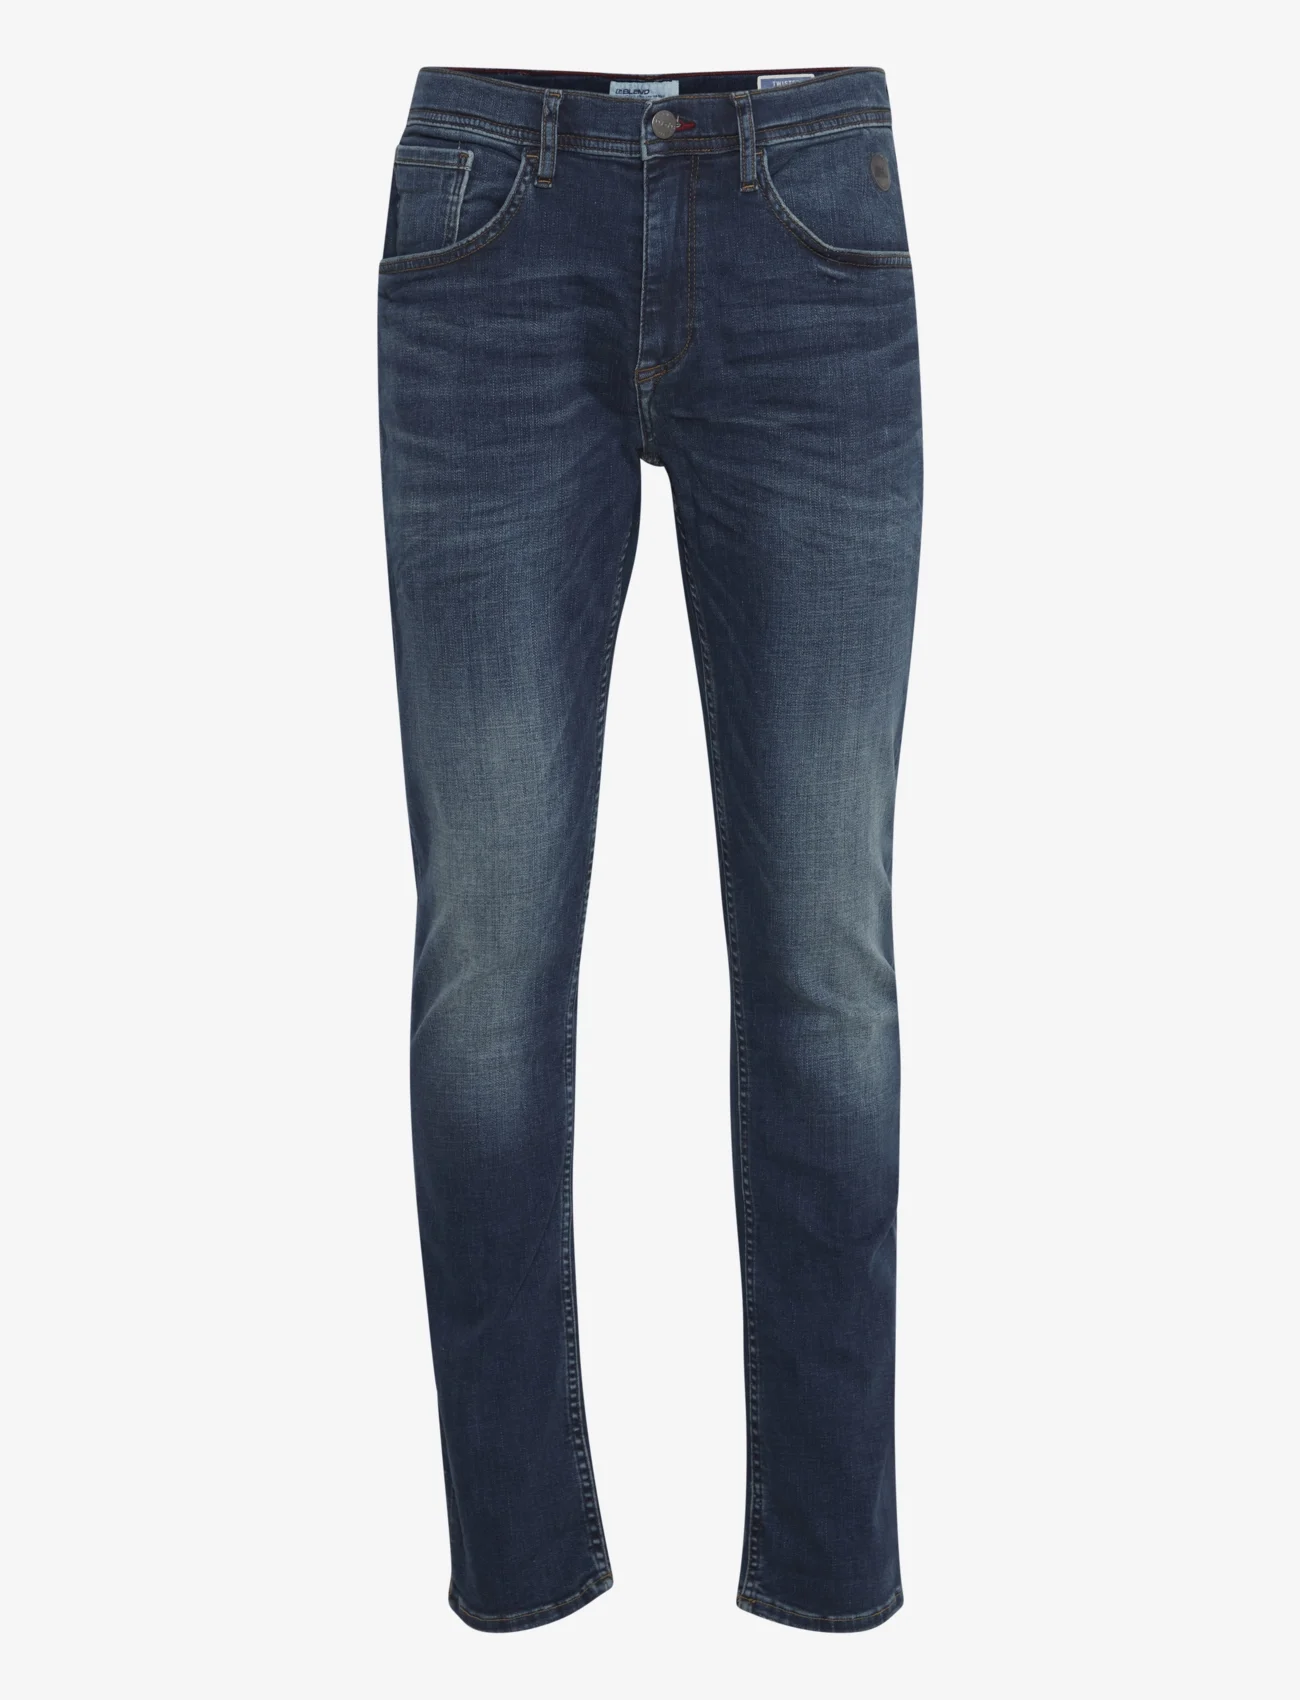 Blend - Twister fit - Multiflex NOOS - slim jeans - denim dark blue - 1